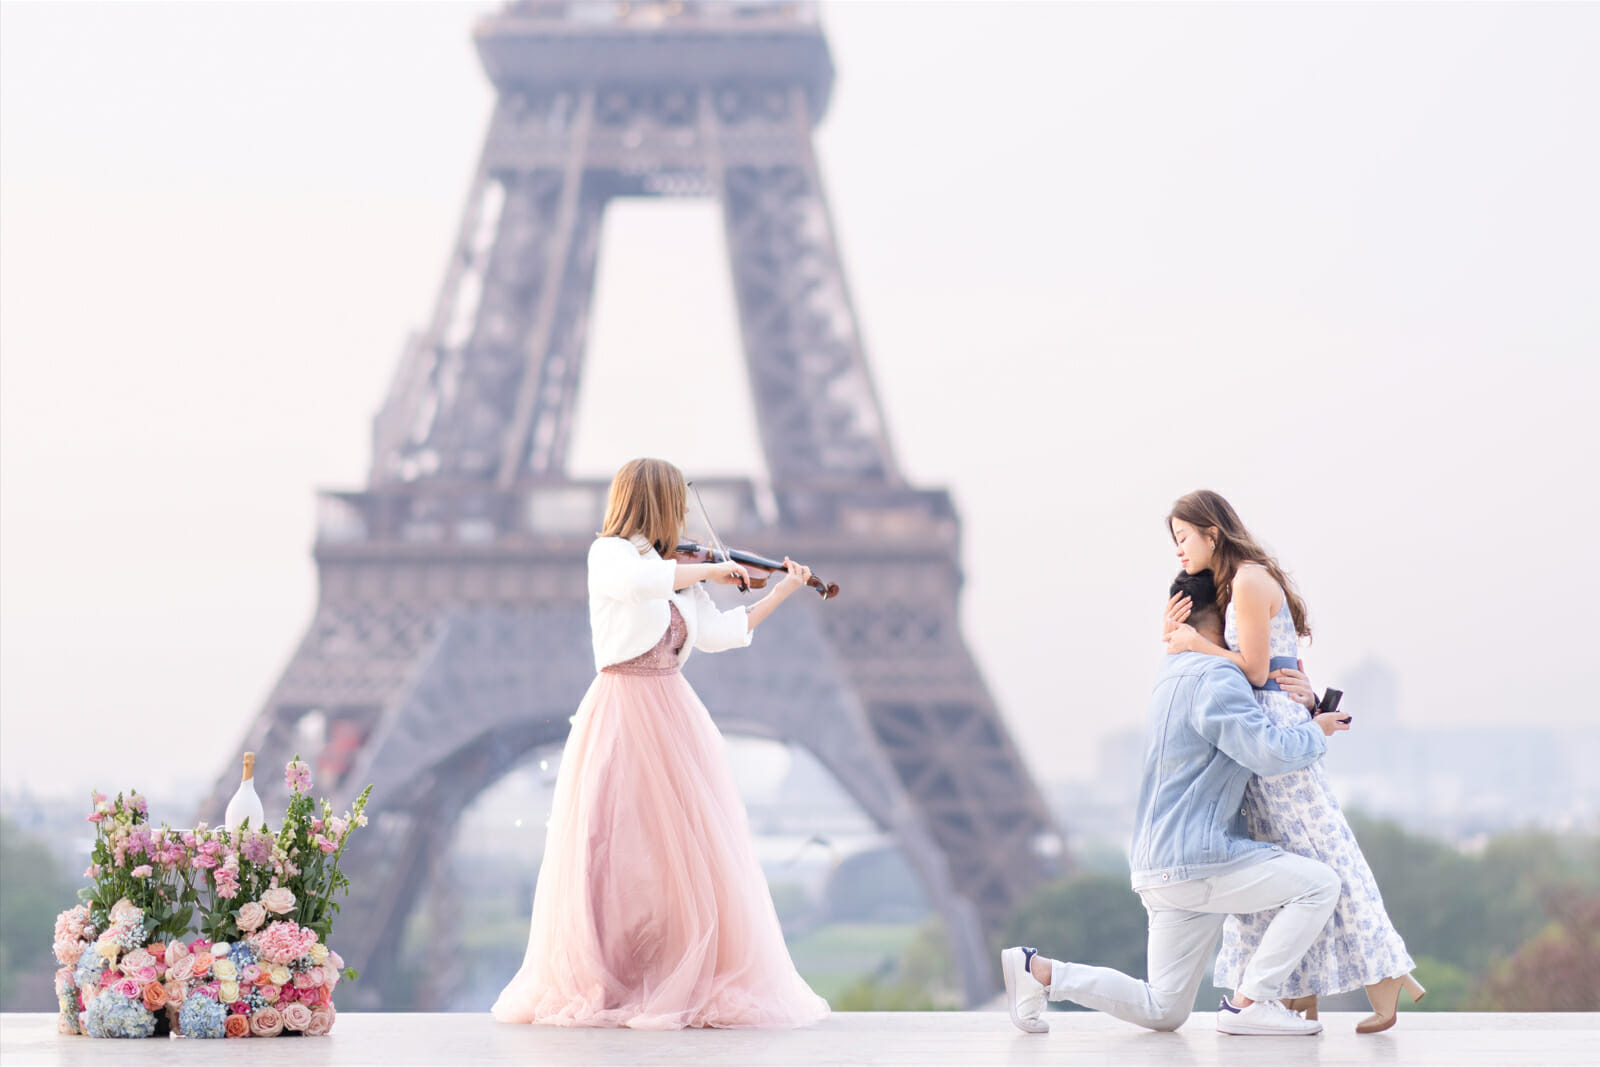 The Best Eiffel Tower Photo Spots by The Paris Photographer 2023